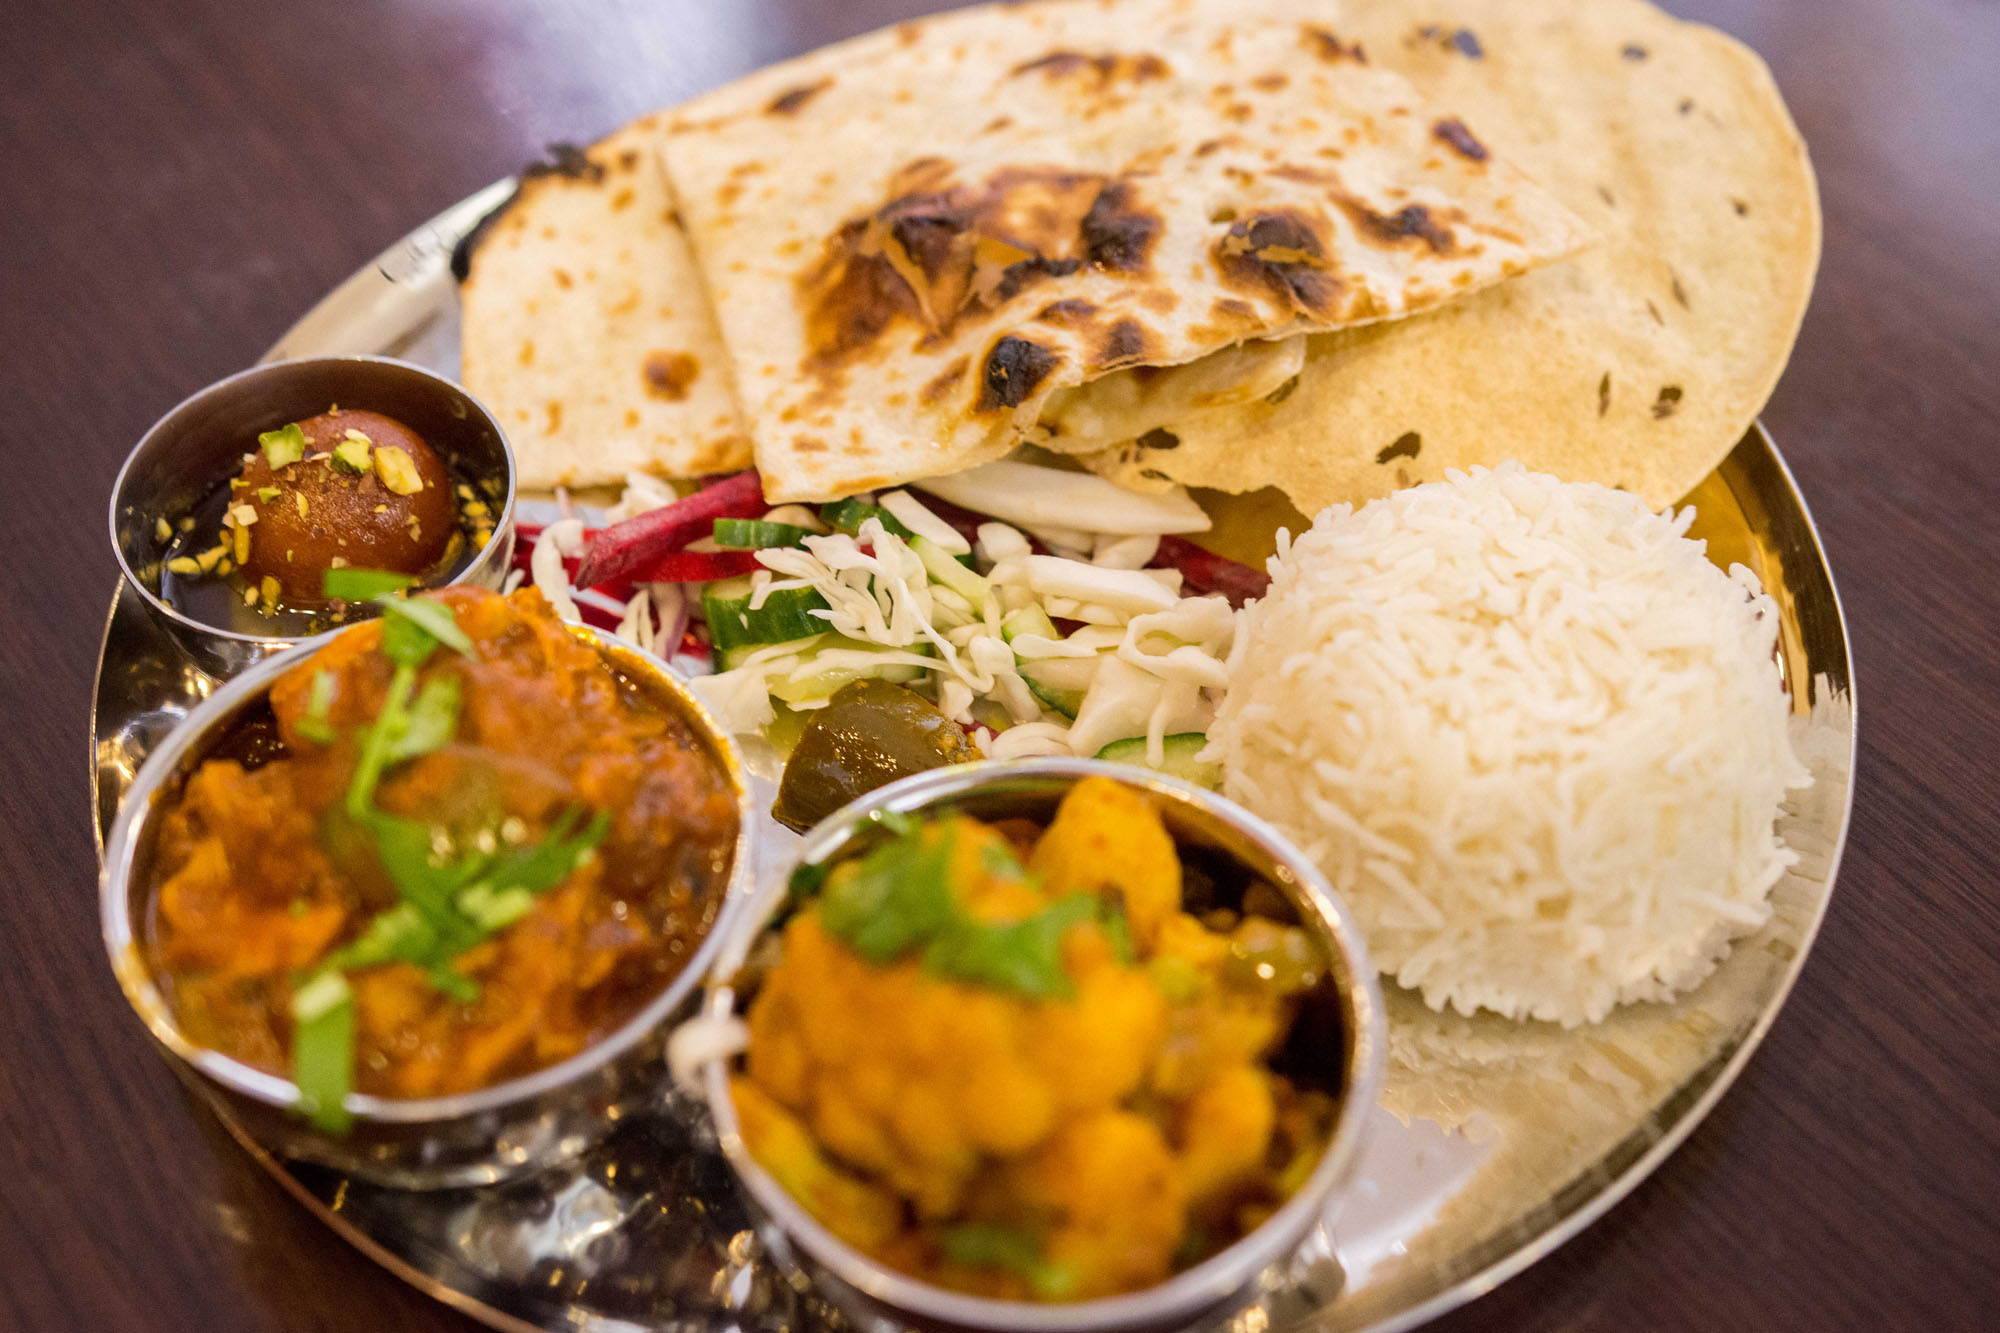 Best Indian Food Restaurants Indian Food Delivery Restaurants Near Me